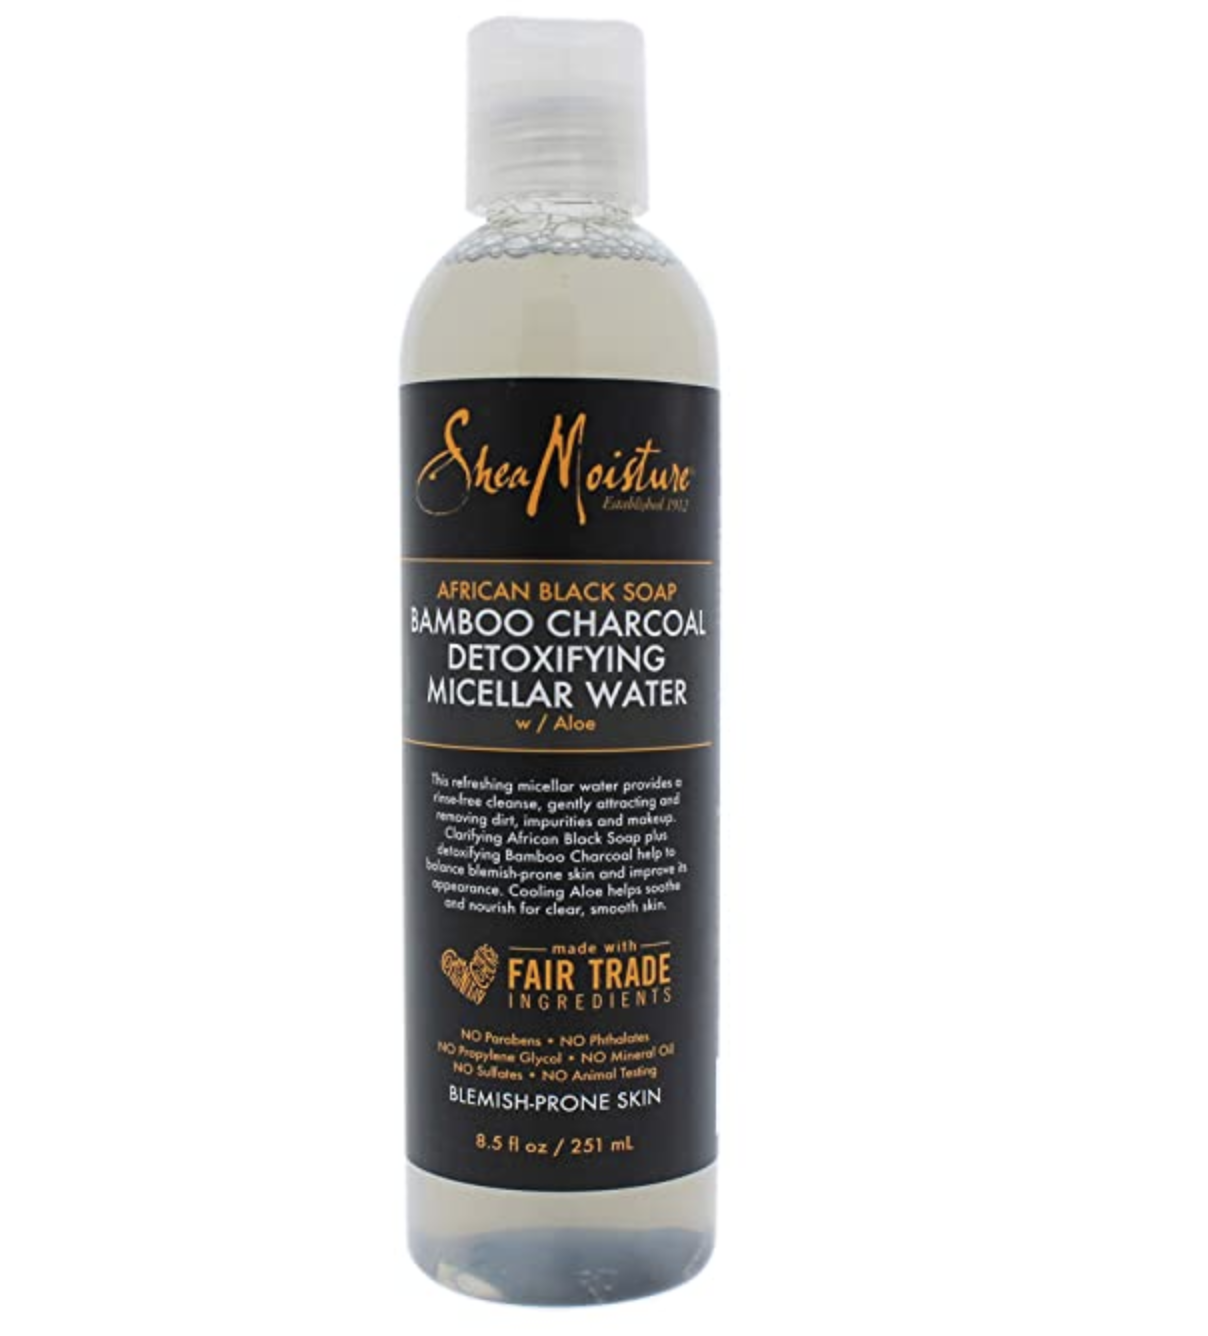 Shea Moisture African Black Soap Bamboo Charcoal Detoxifying Micellar Water